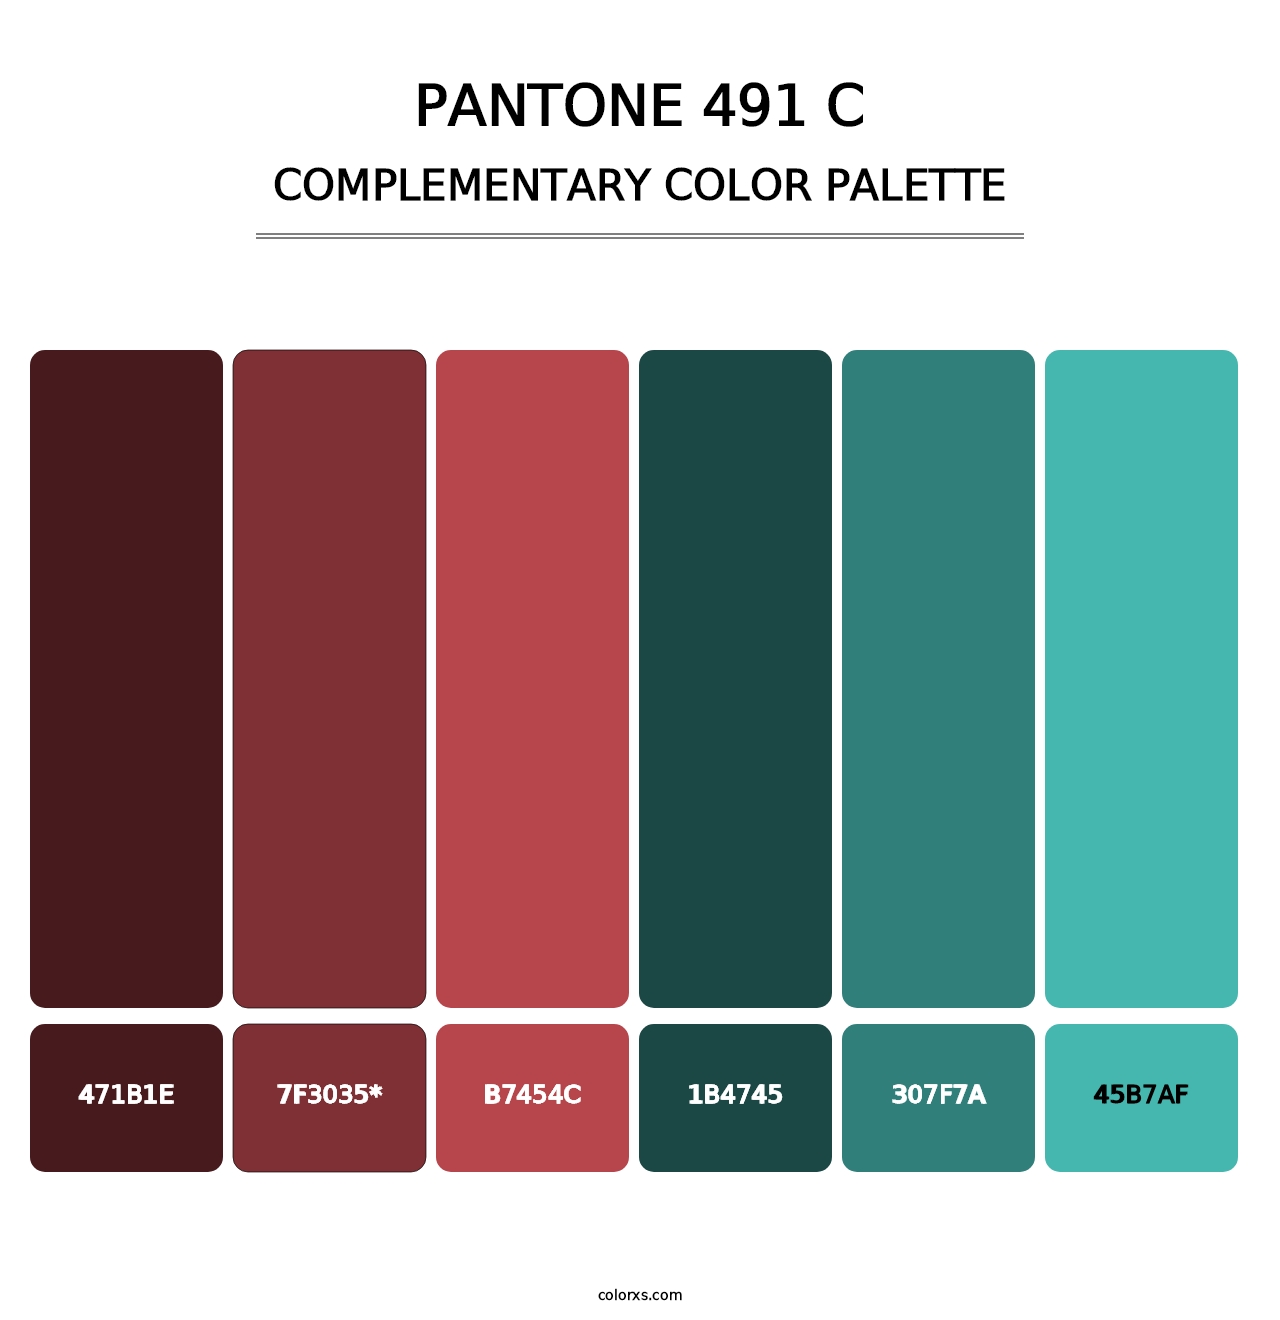 PANTONE 491 C - Complementary Color Palette